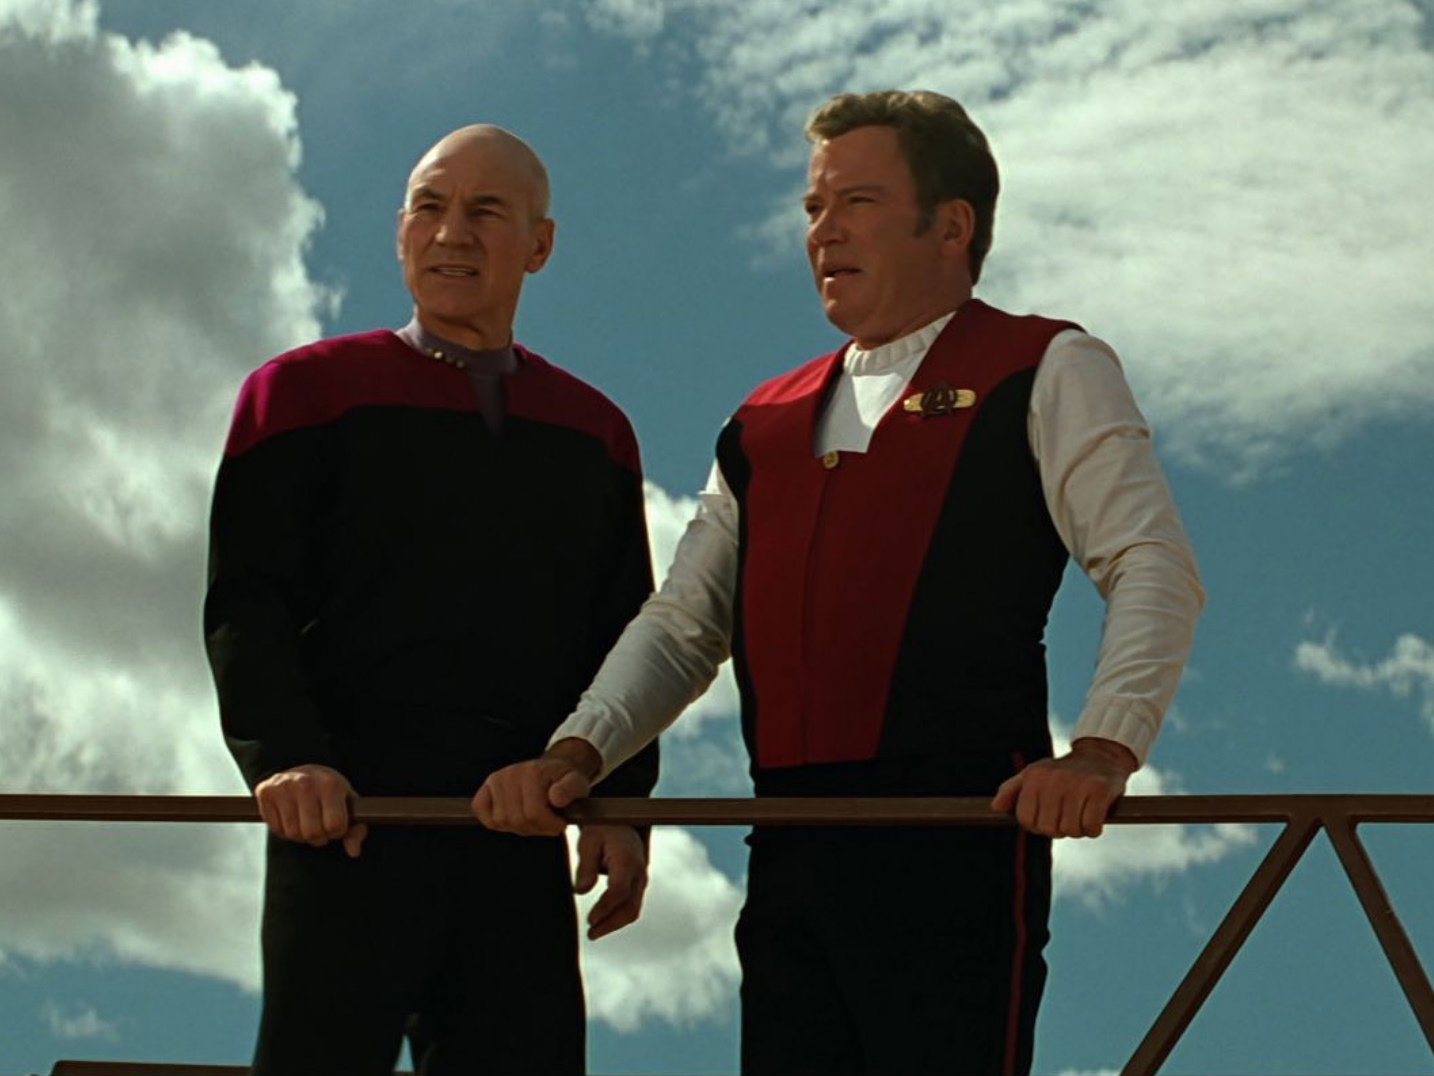 William Shatner Says He Would “Love” Star Trek As Captain – TrekMovie.com